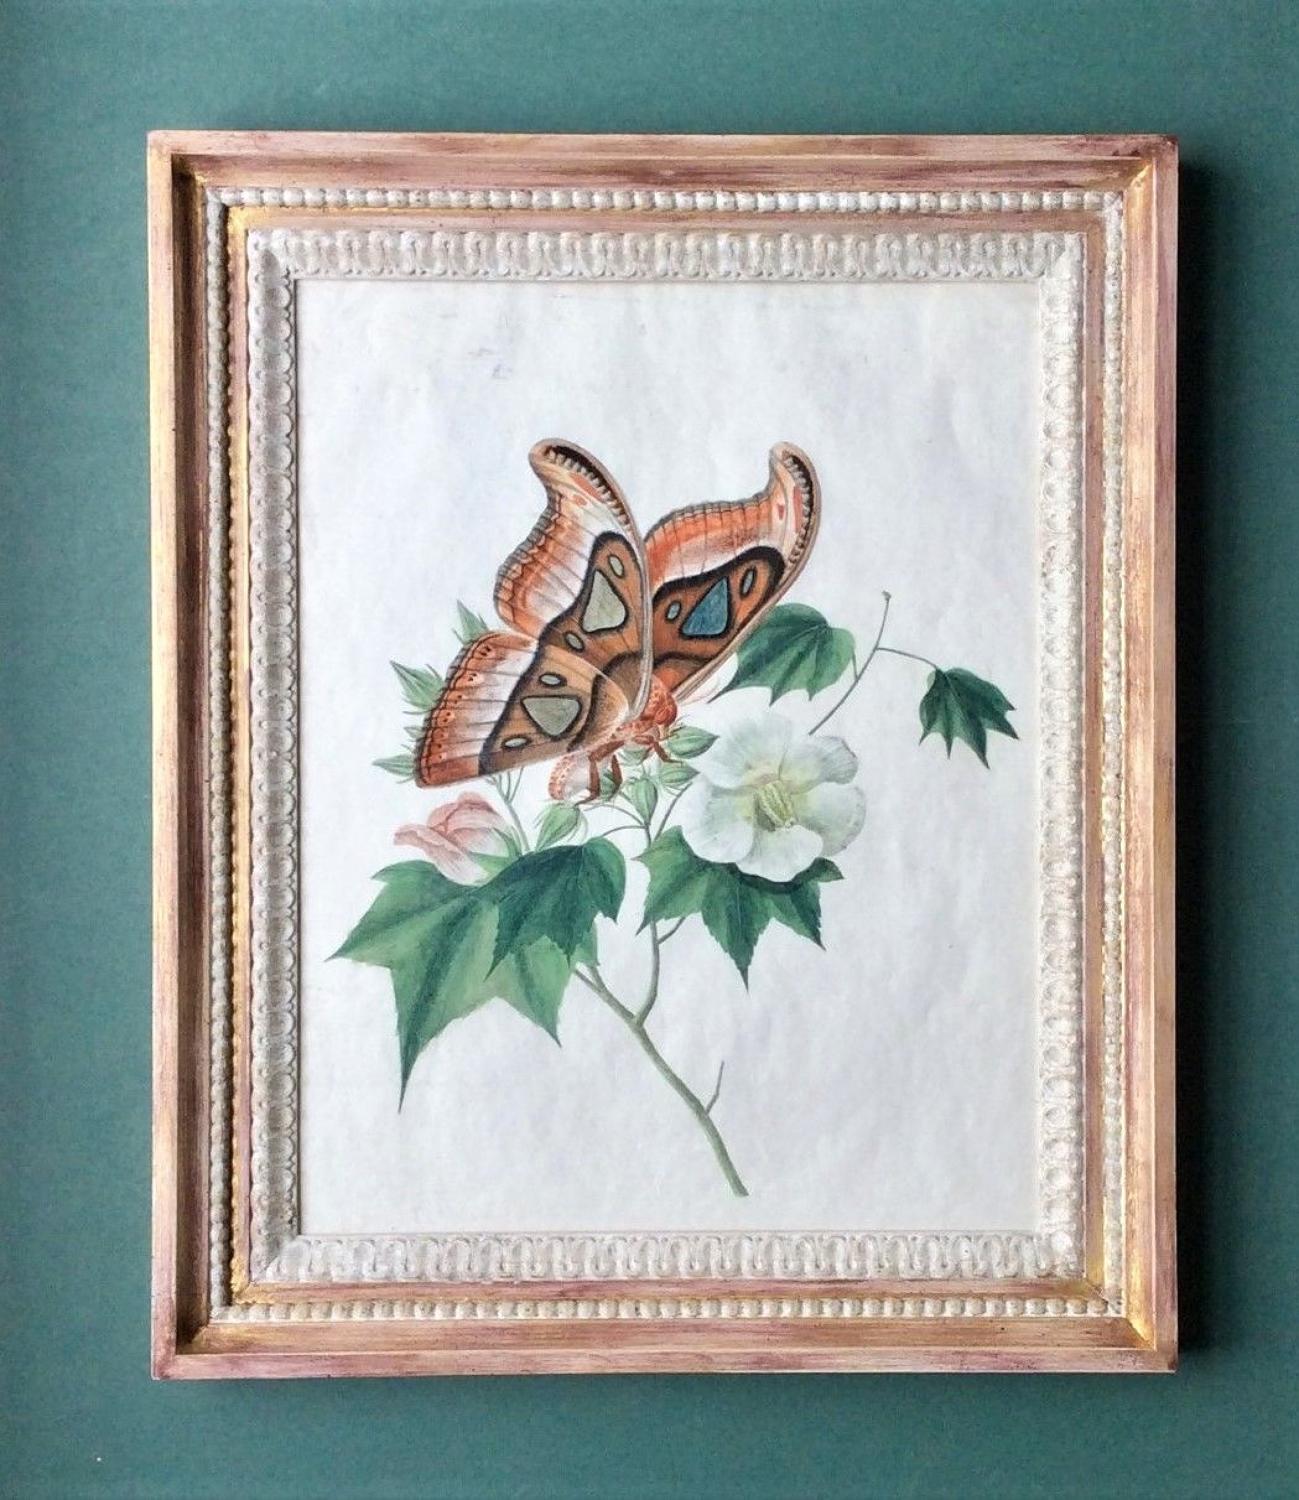 18th century English watercolour studies of flowers, butterflies etc